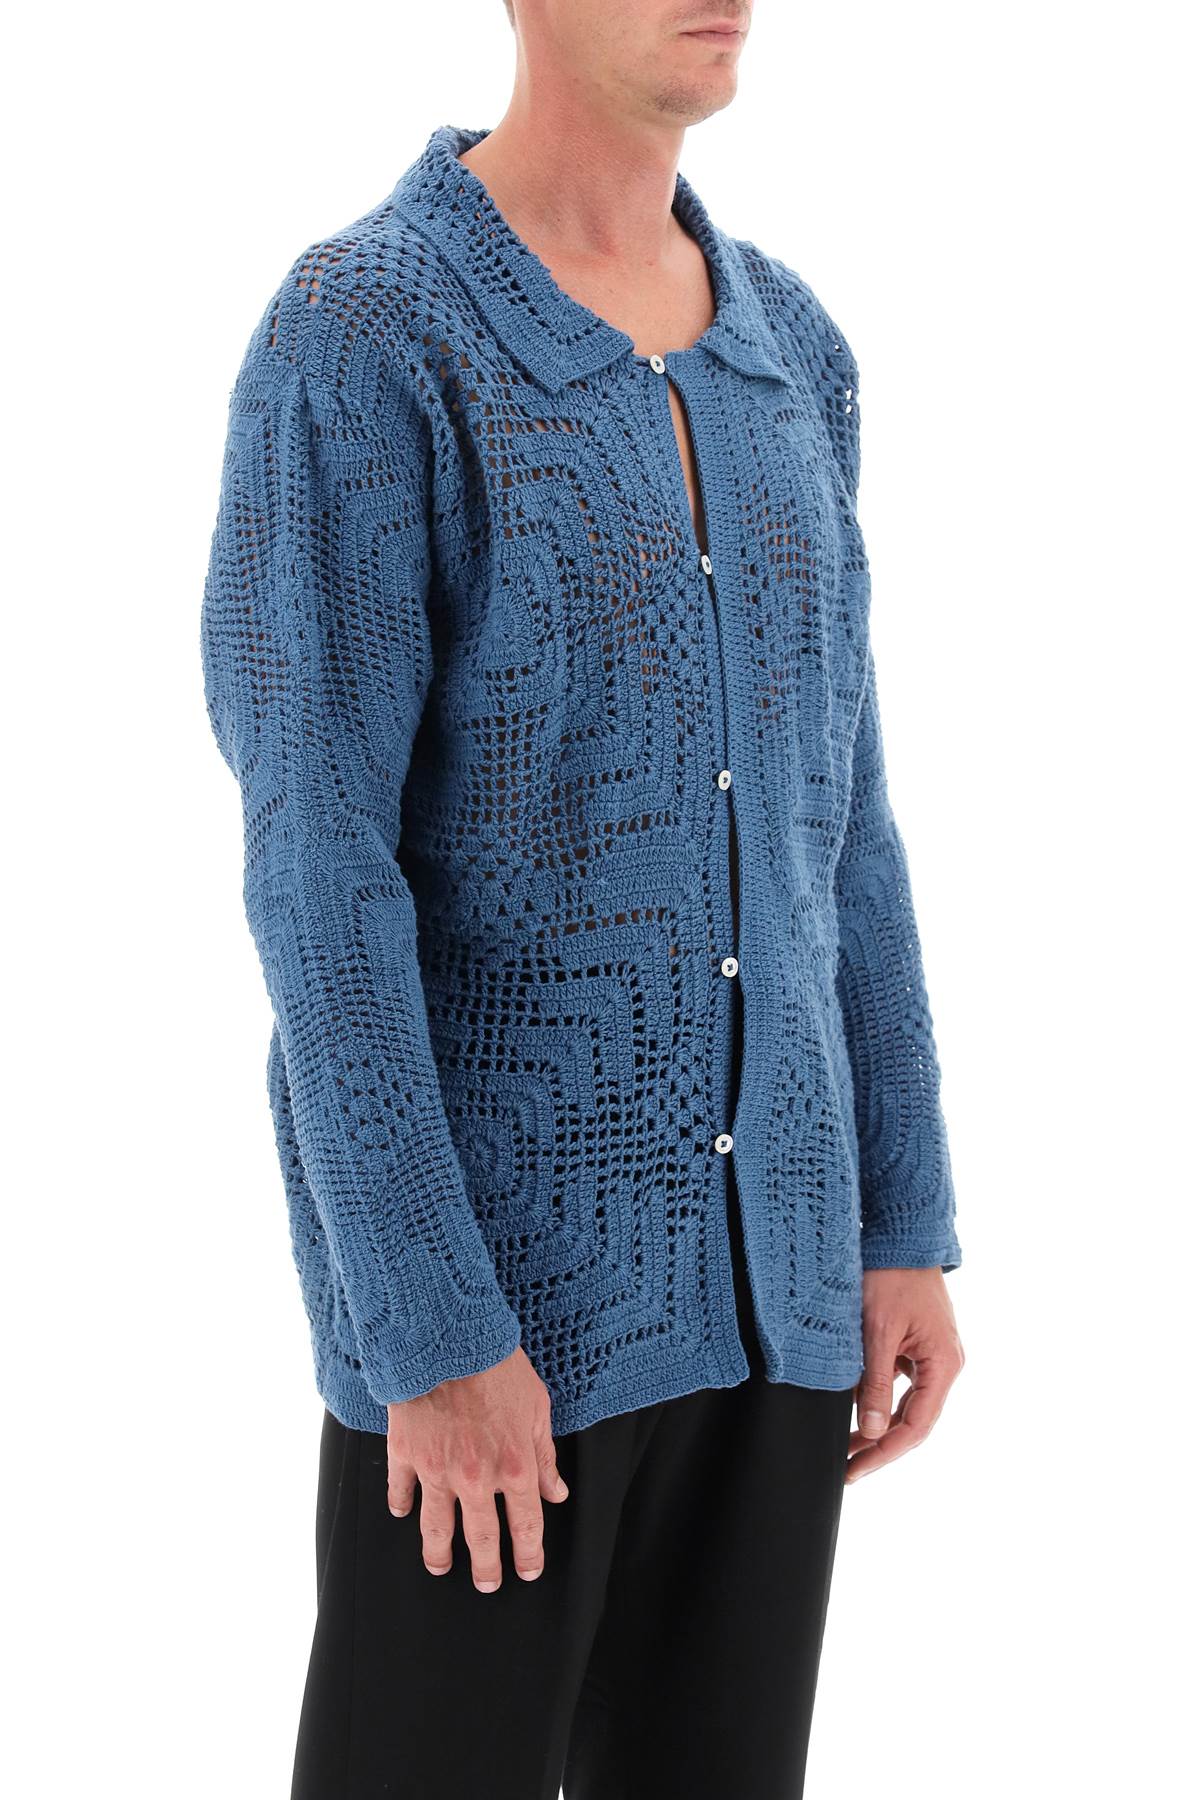 Bode Bode overdyed crochet shirt